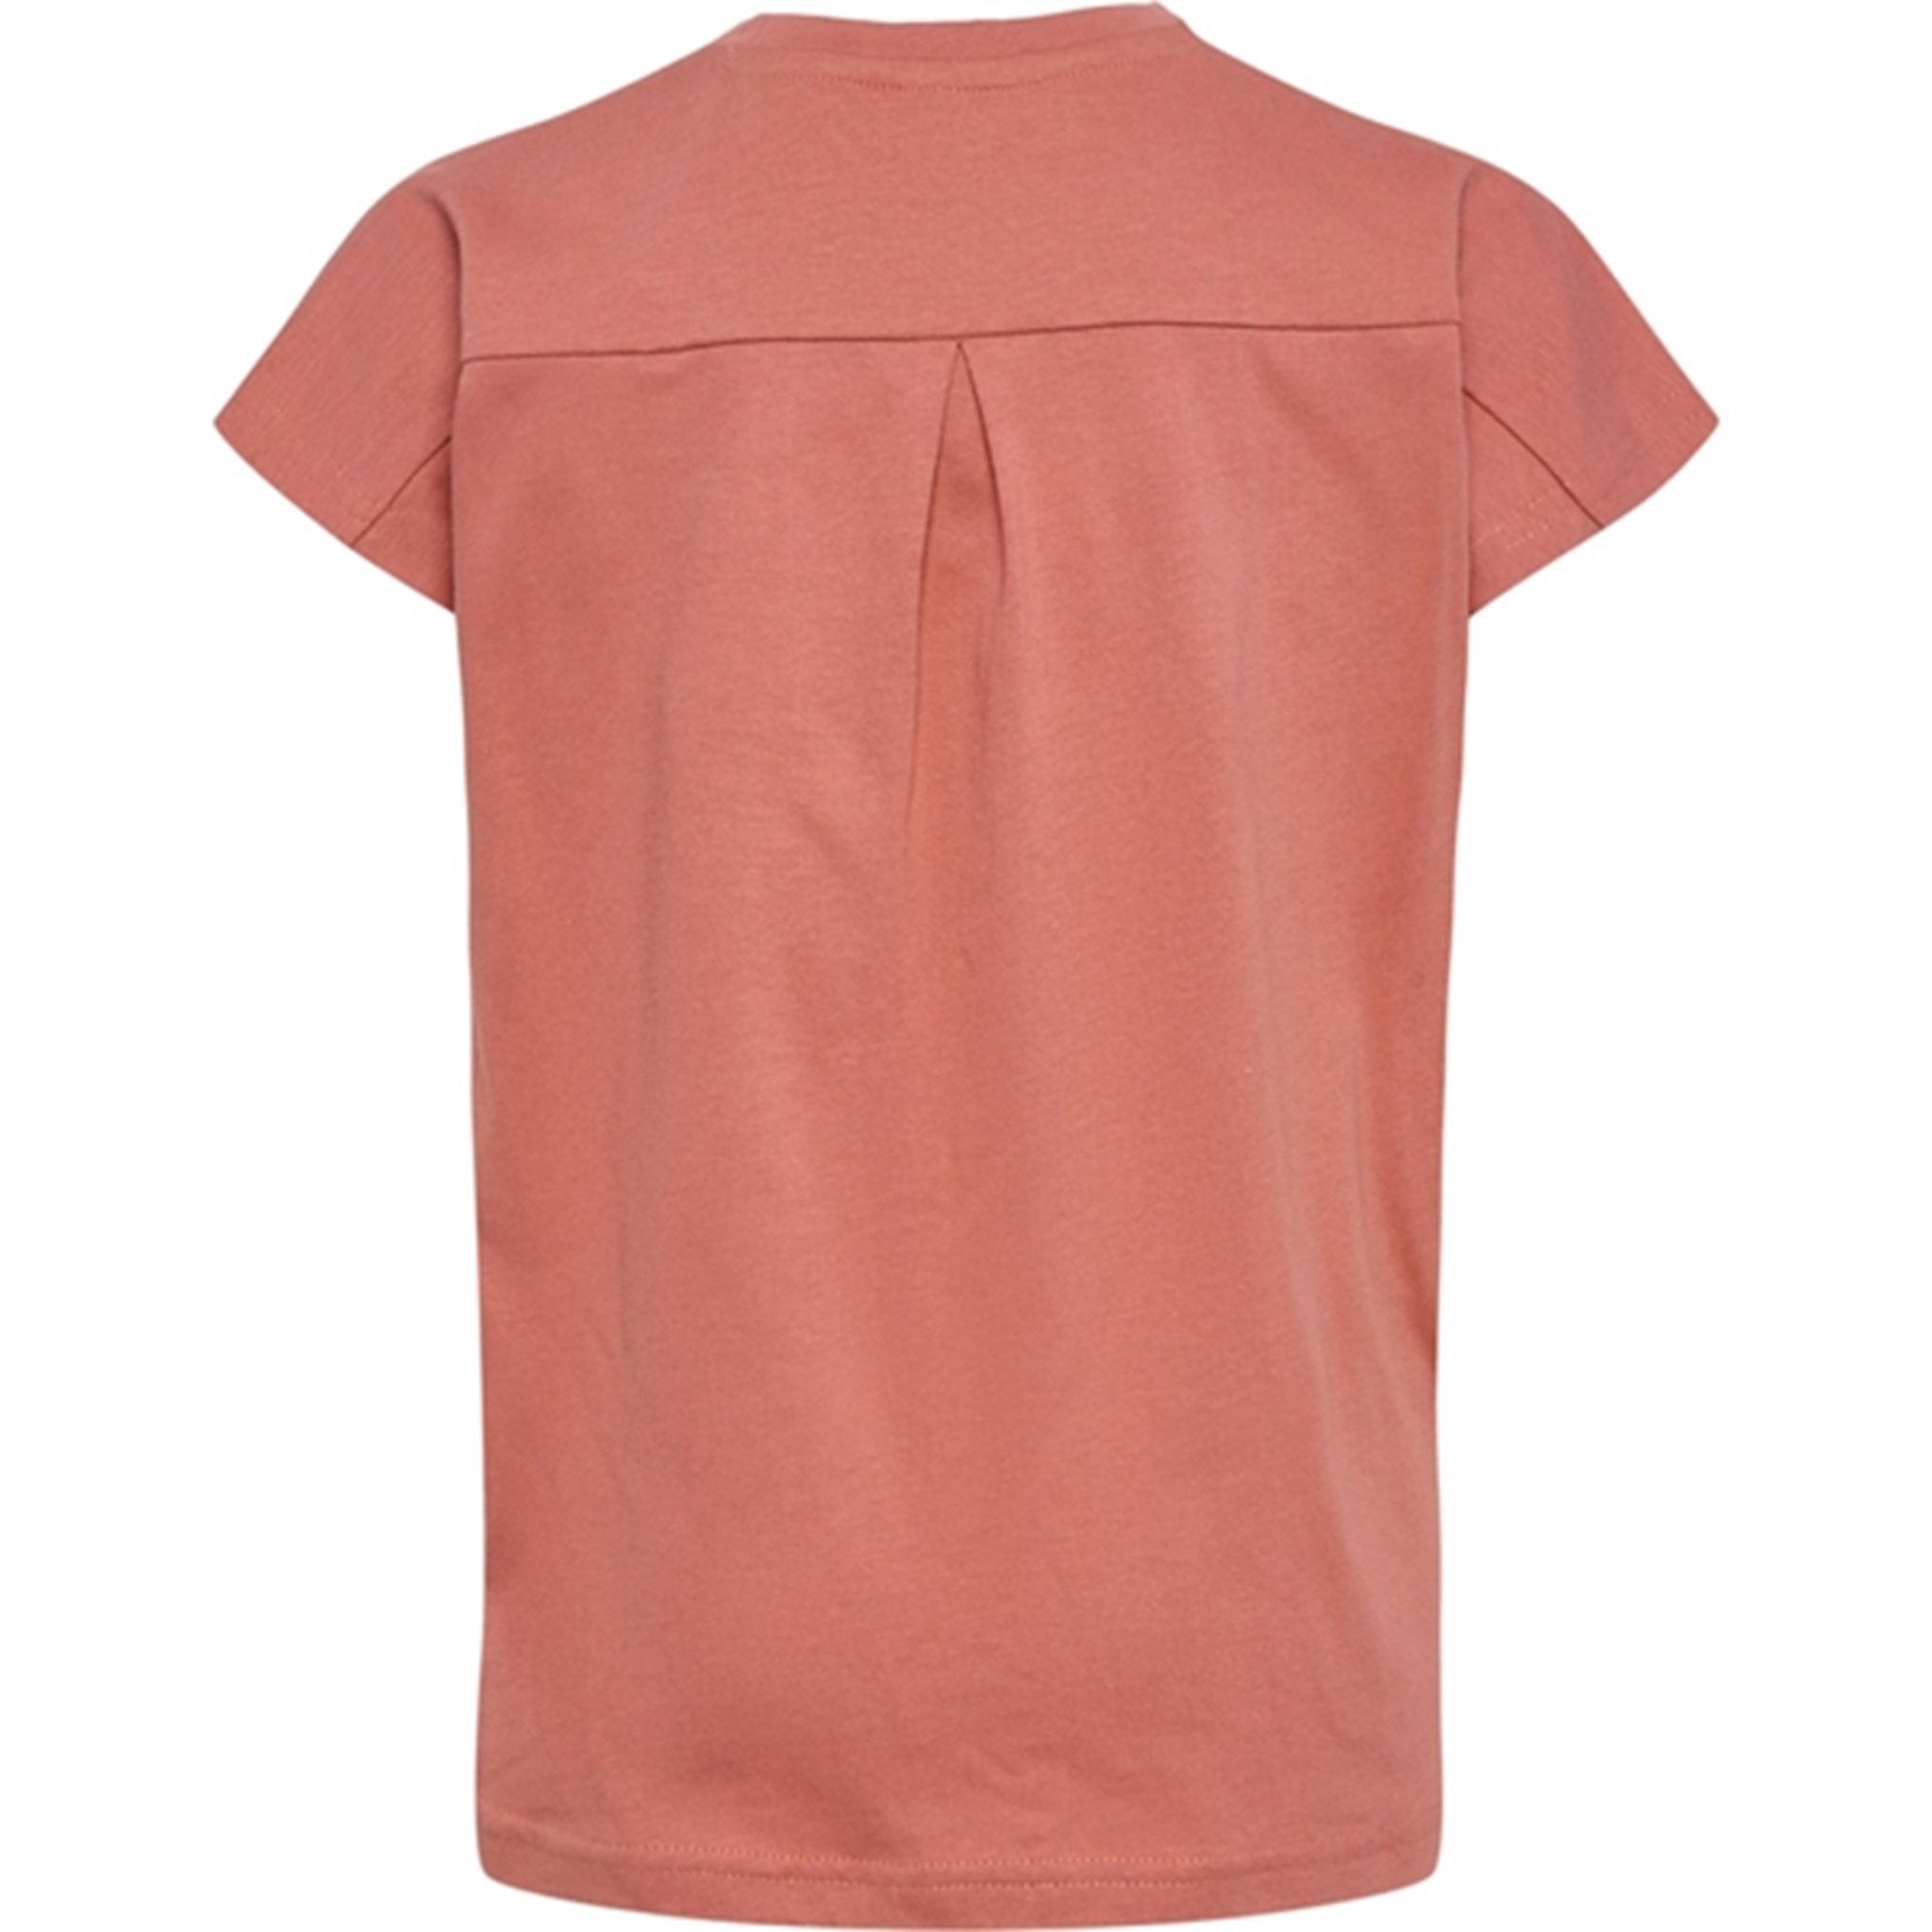 Hummel Canyon Rose Olivia T-shirt S/S 4